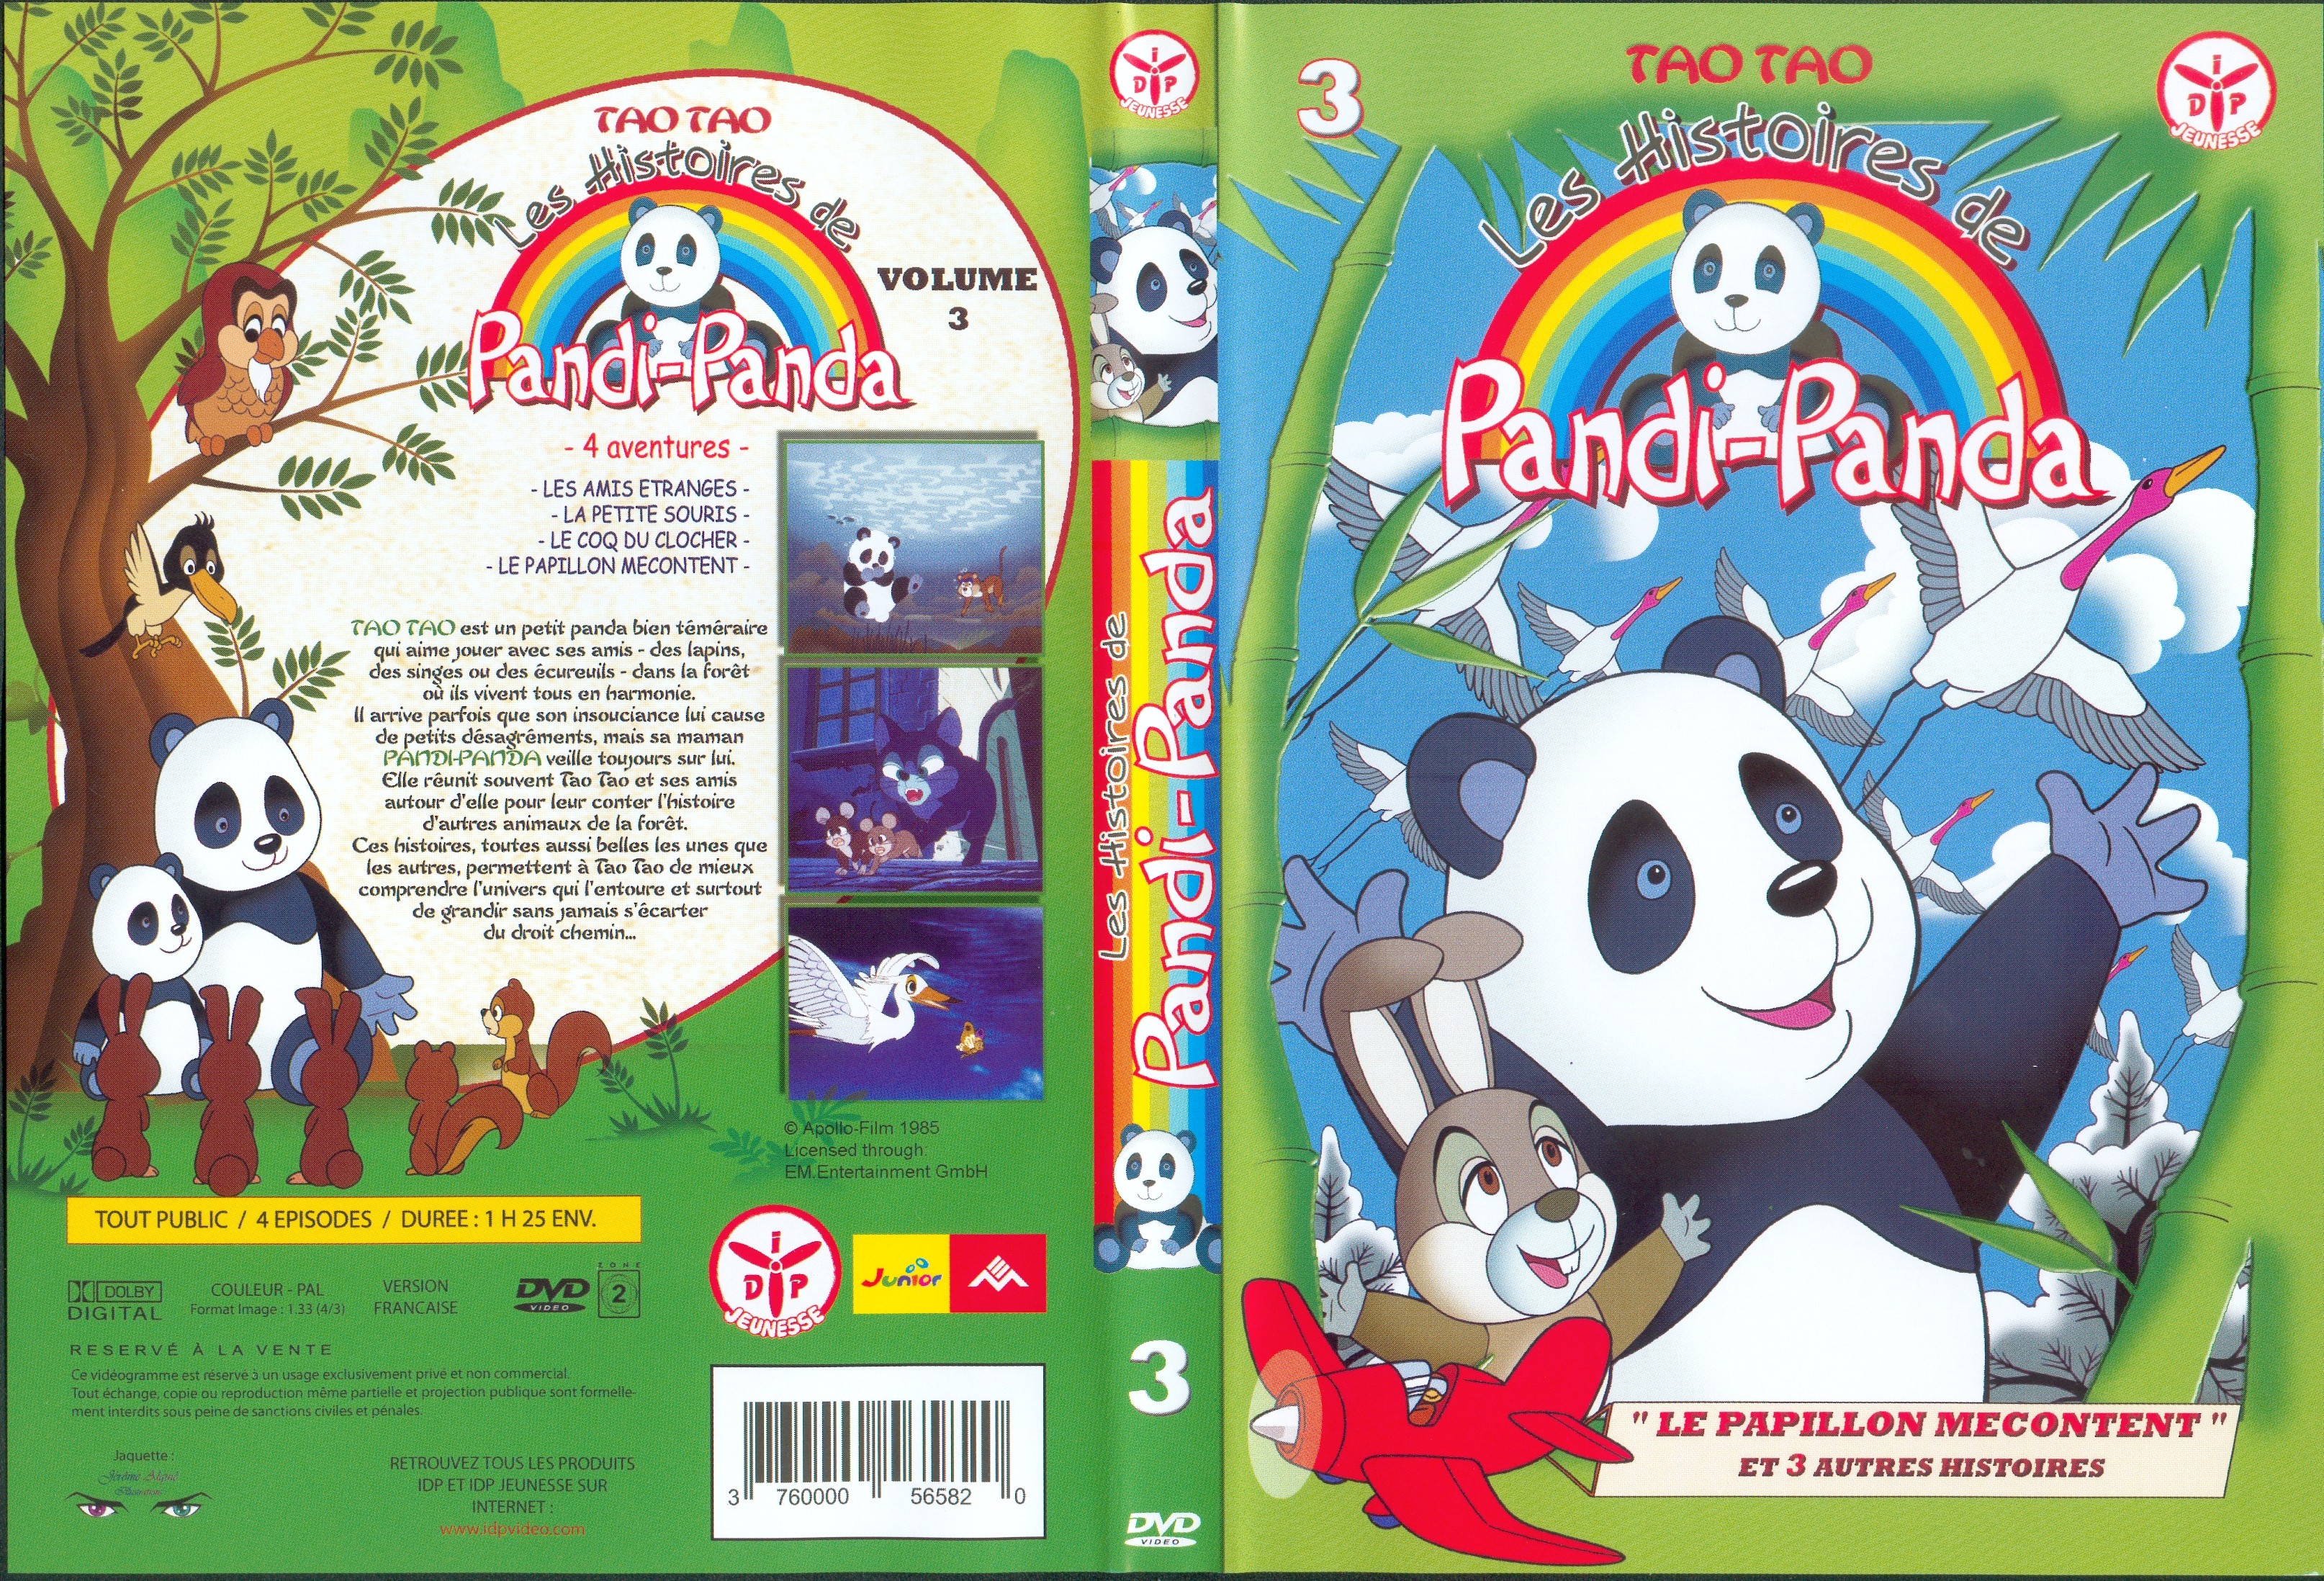 Jaquette DVD Pandi panda vol 3